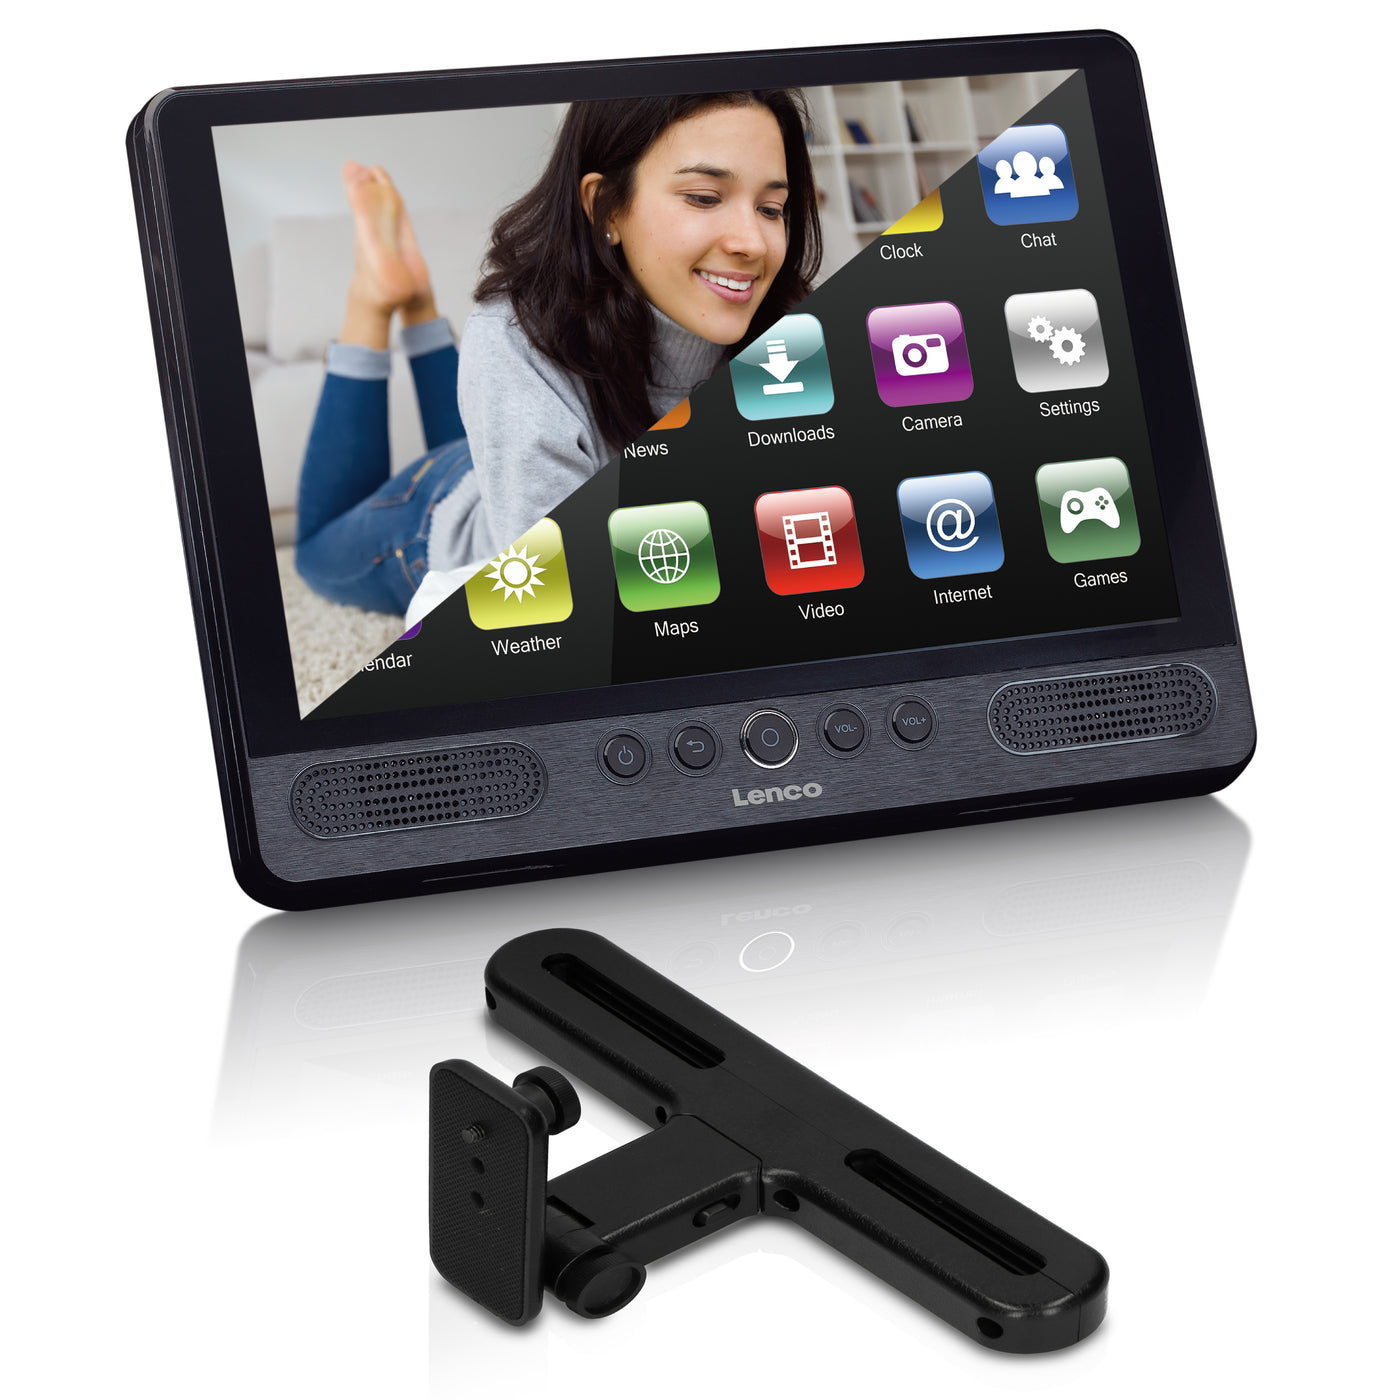 LENCO TDV1001BK - Tablet Portable Lenco - USB - -Catalog - WIFI – Android DVD player